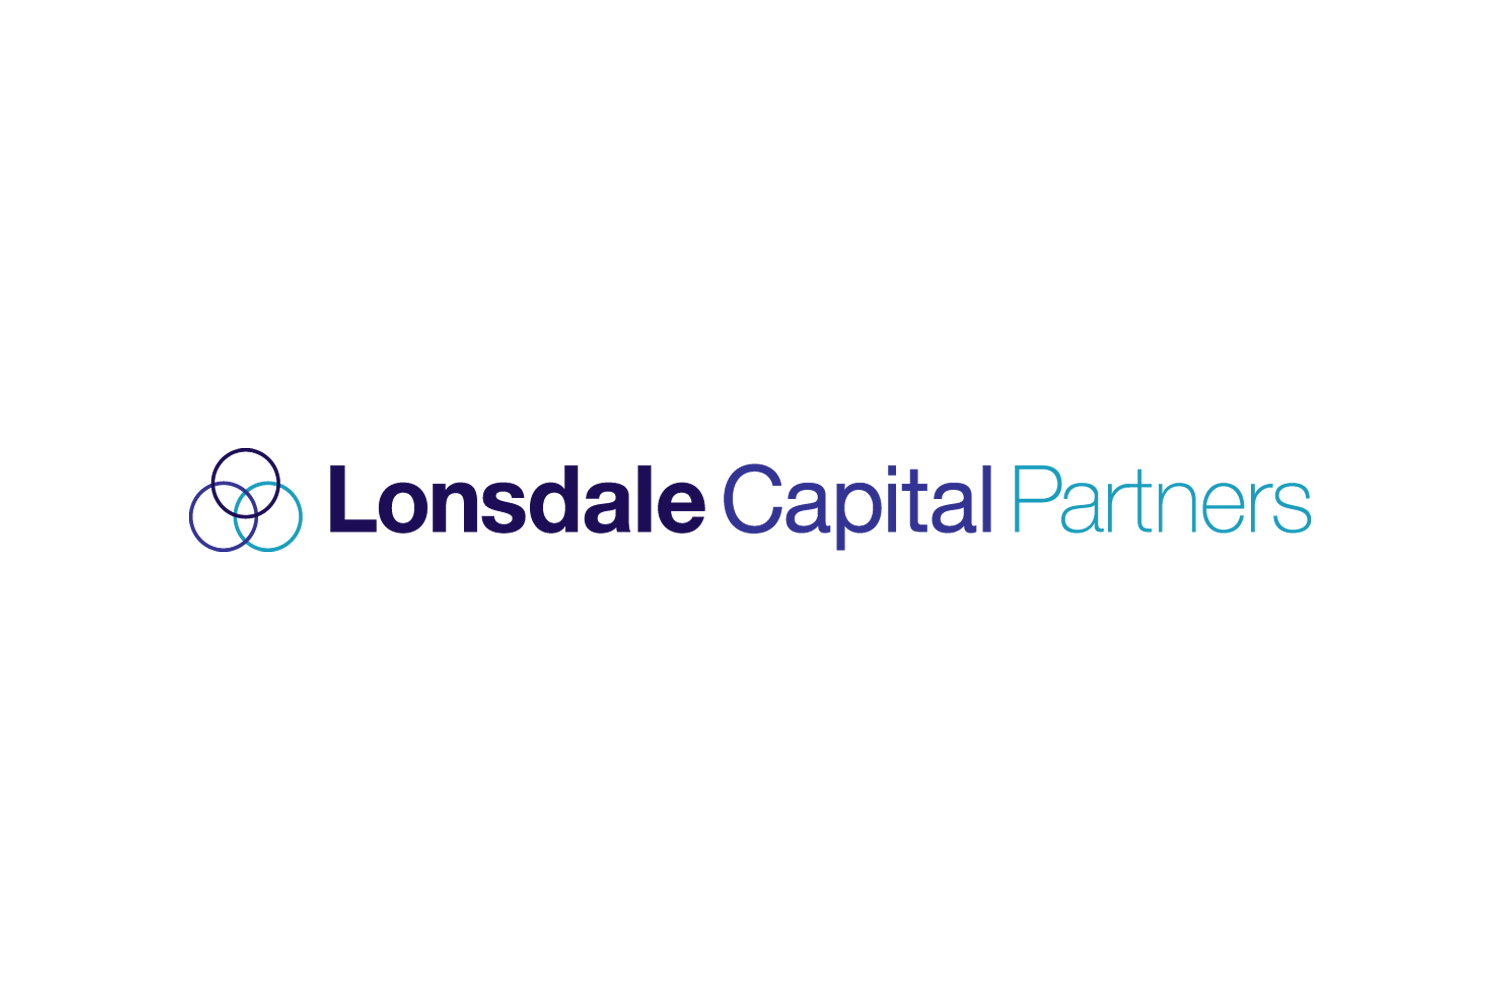 Lonsdale Capital